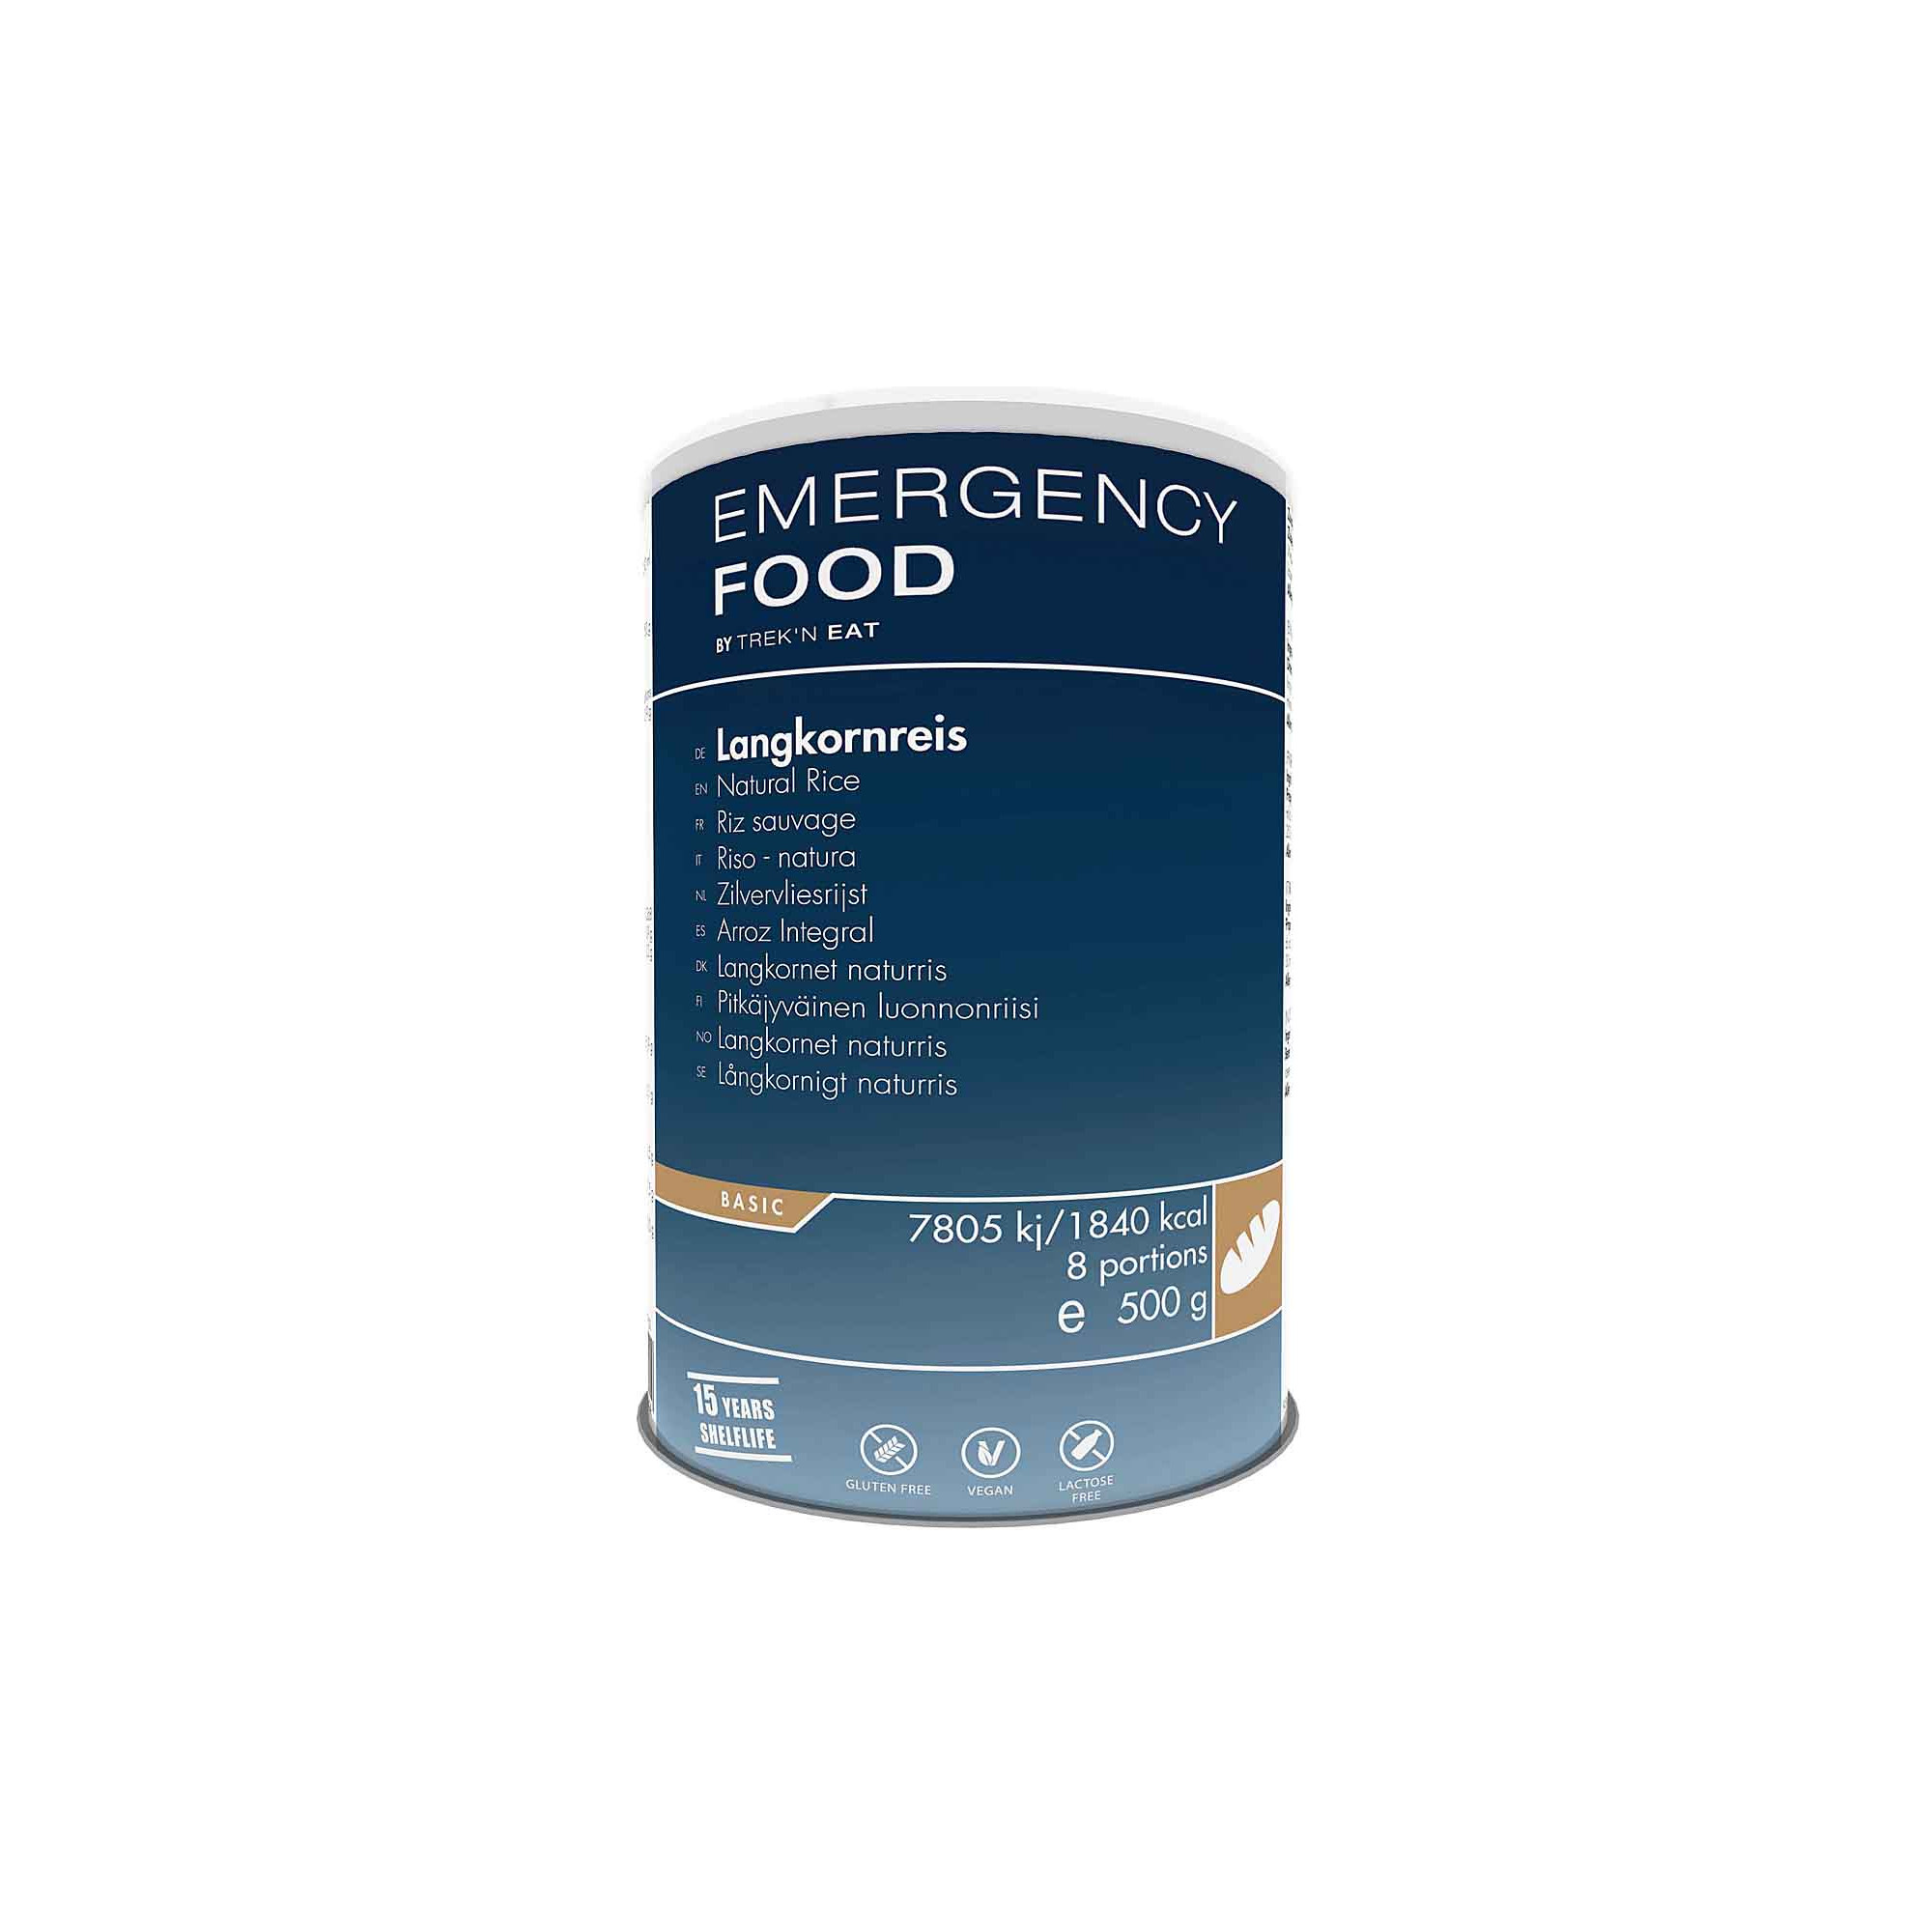 Emergency food stock Wild rice Emergency Food 4015753738014